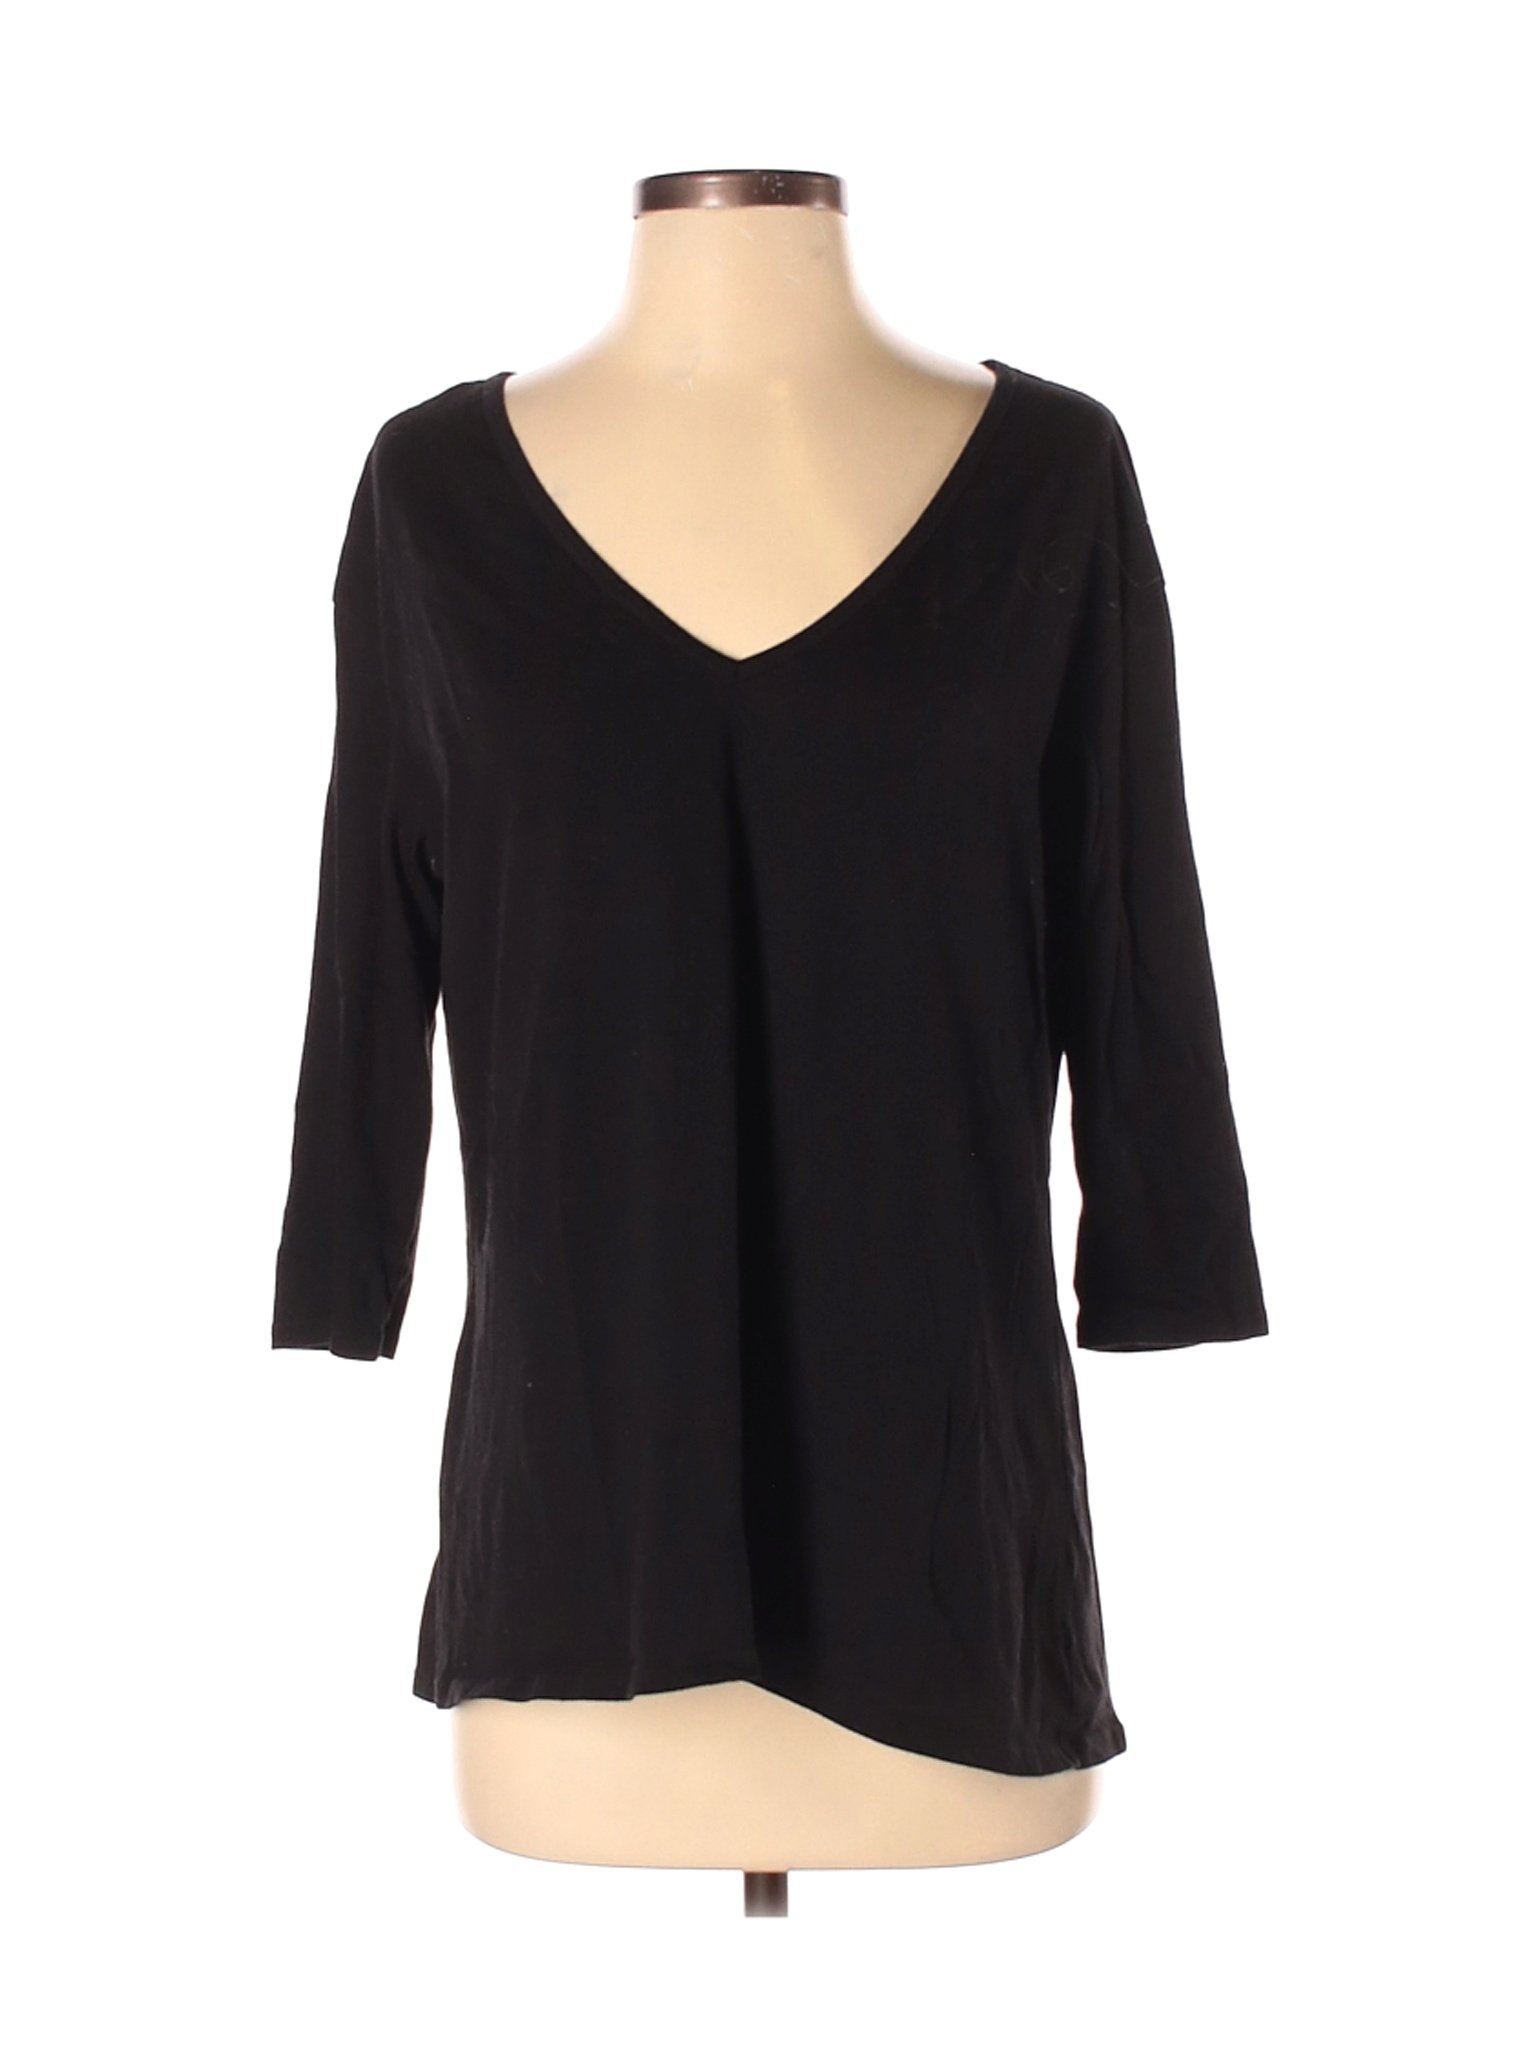 Victoria's Secret Women Black Long Sleeve T-Shirt S | eBay